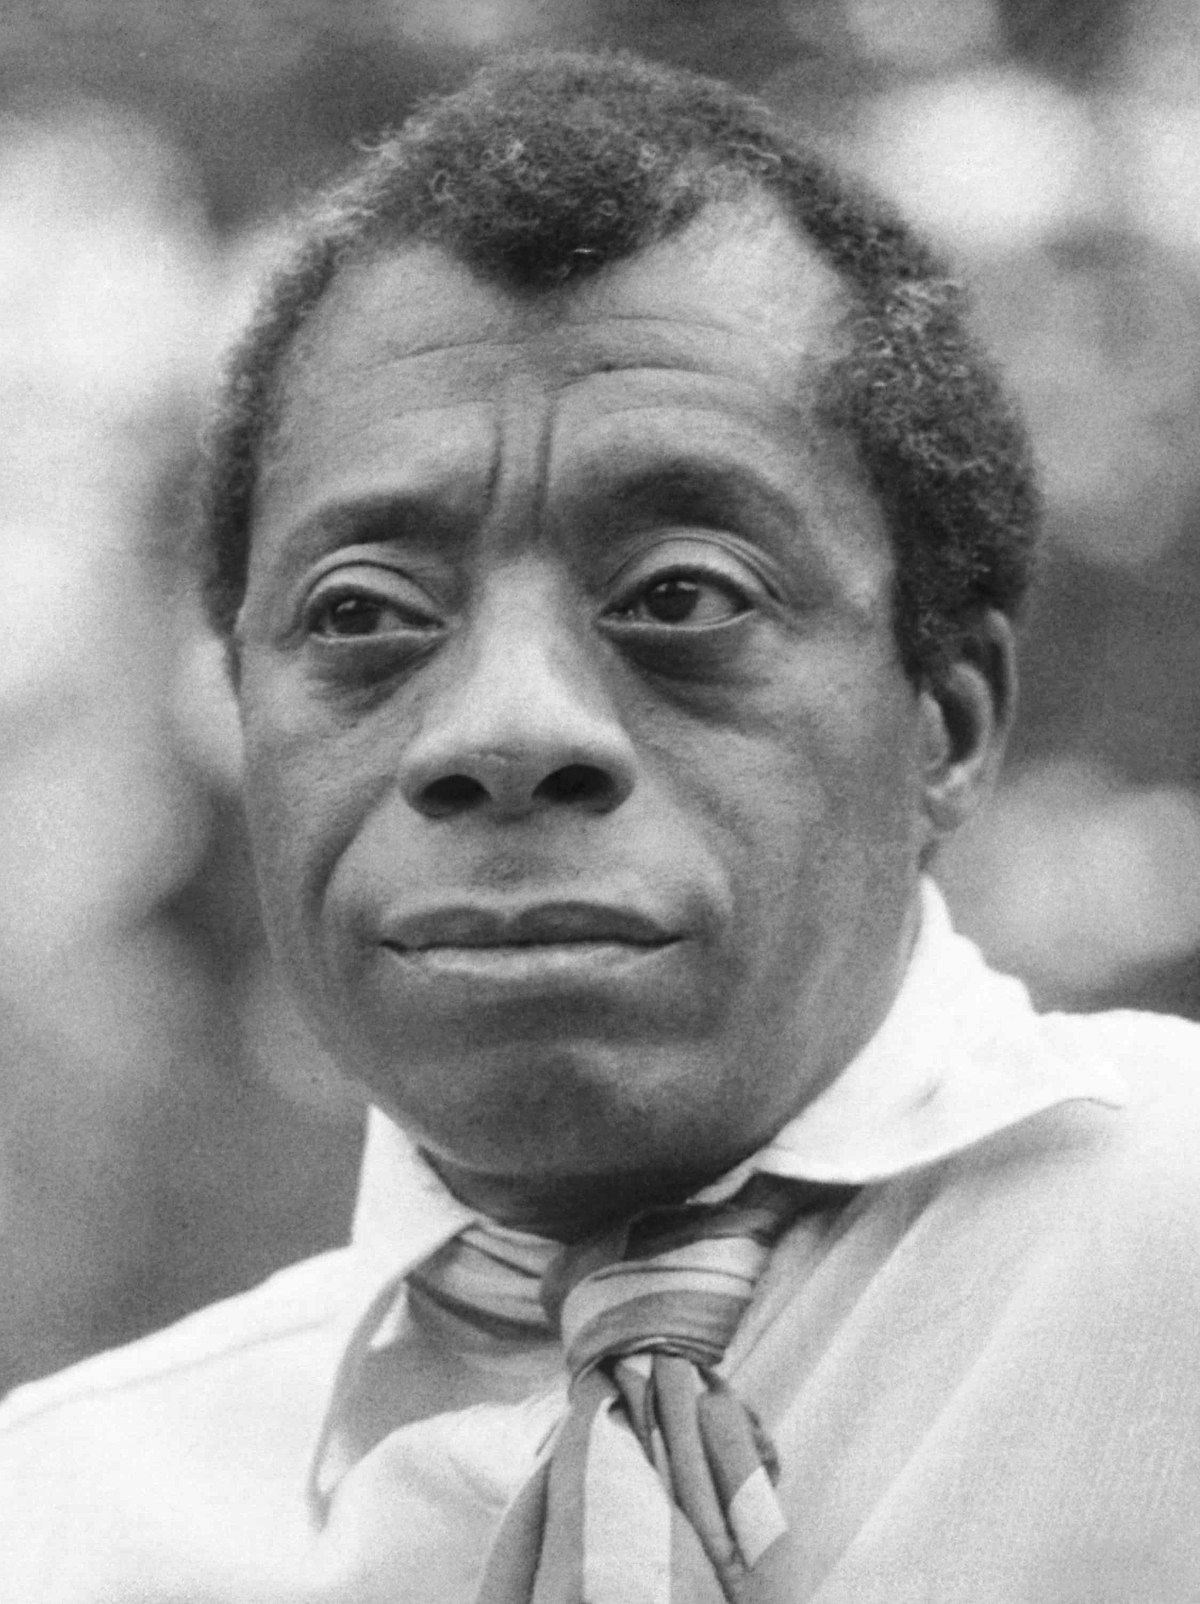 James Baldwin - Wikipedia